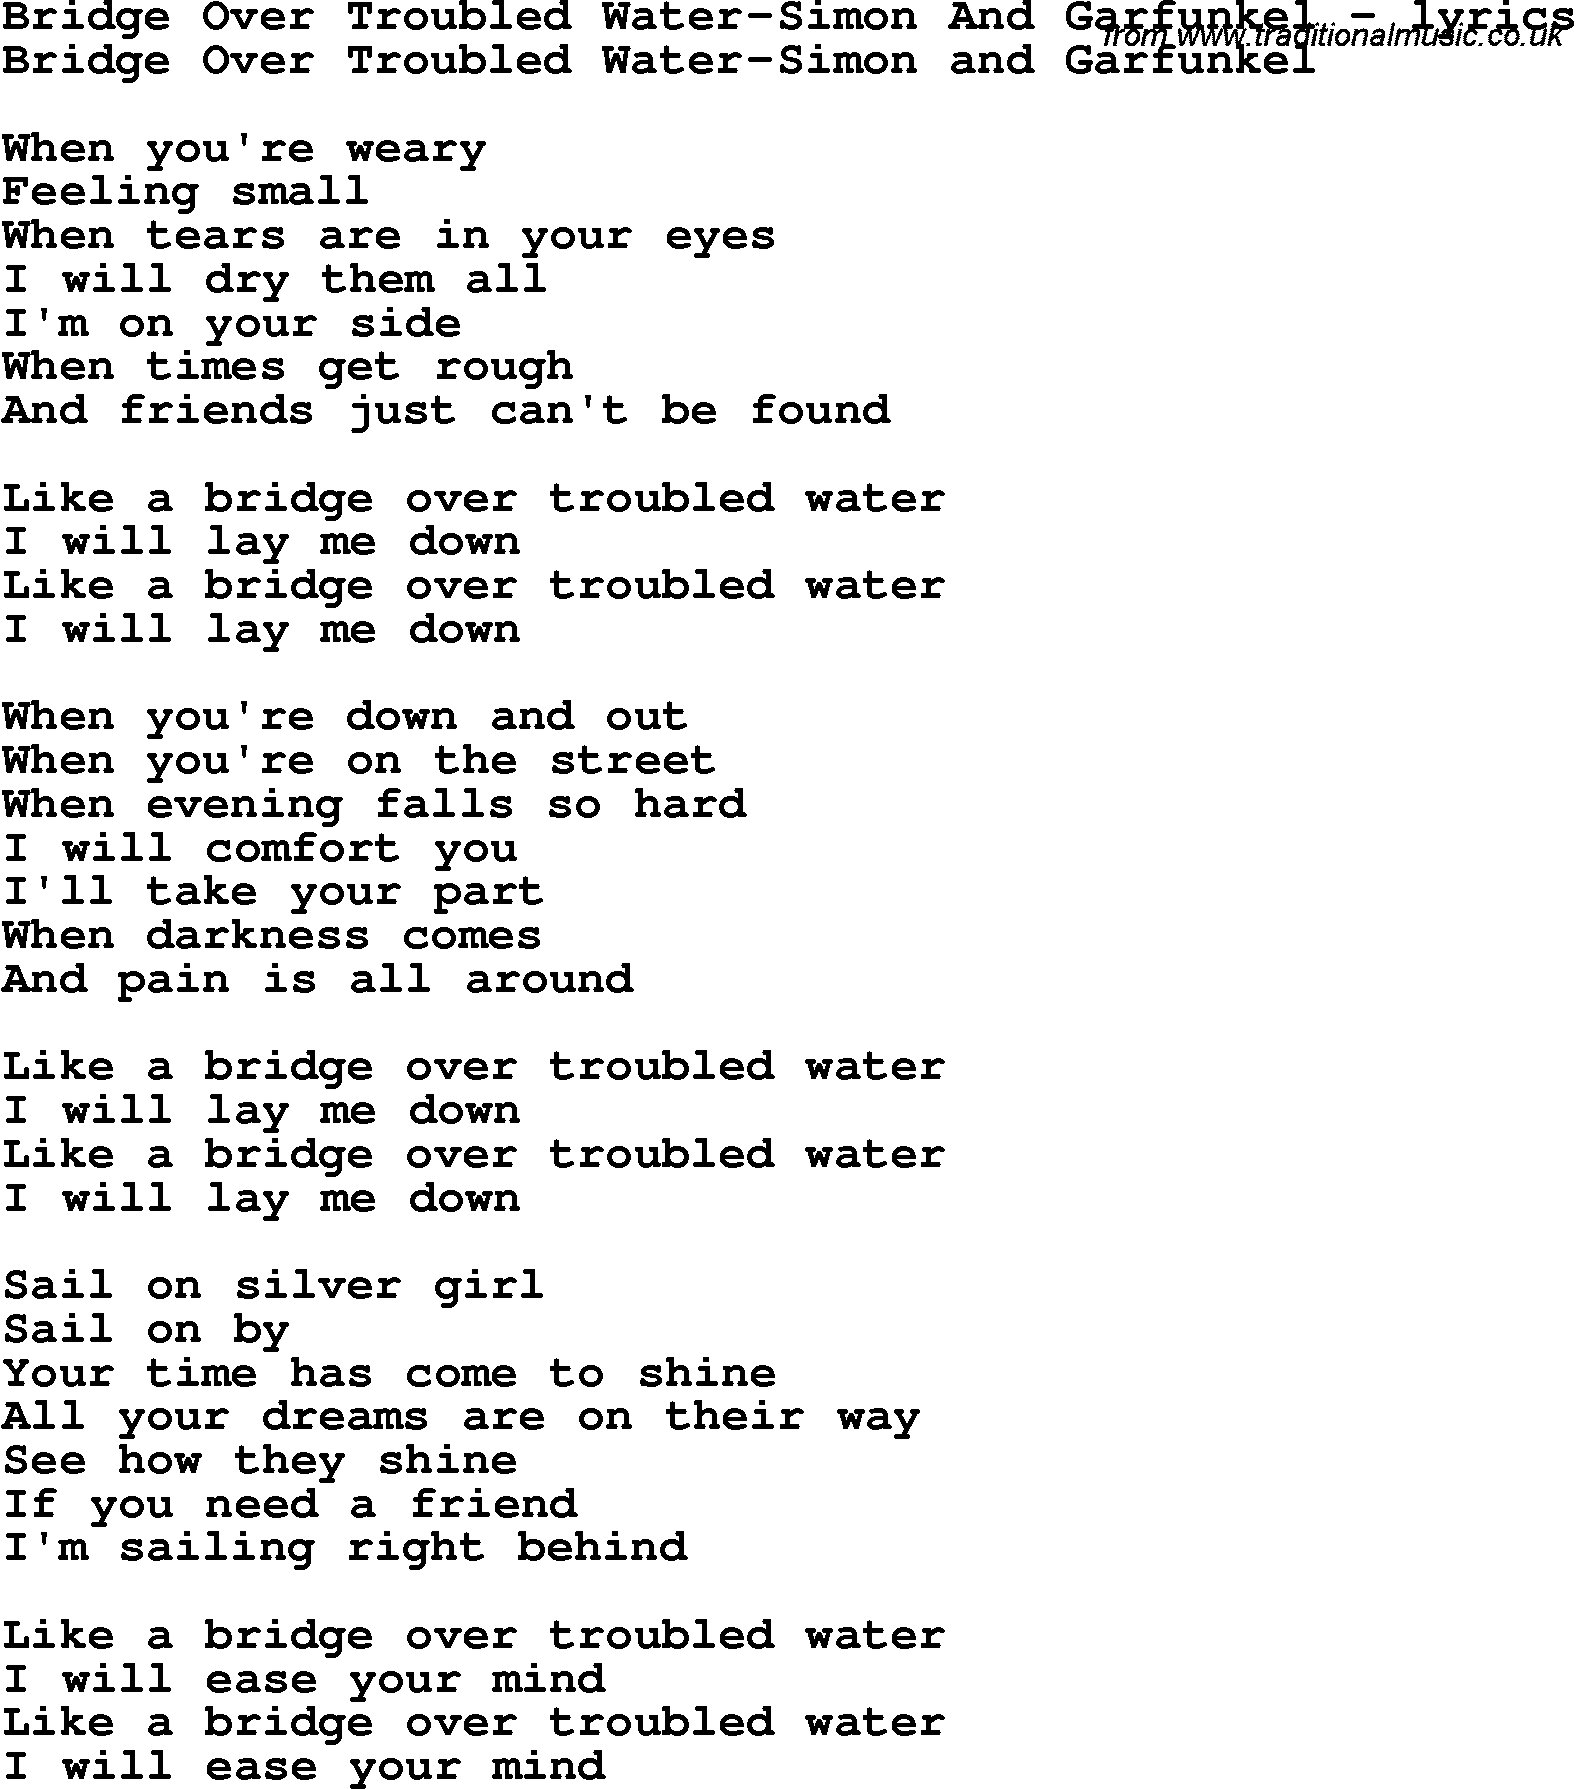 Love Song Lyrics for: Bridge Over Troubled Water-Simon And Garfunkel